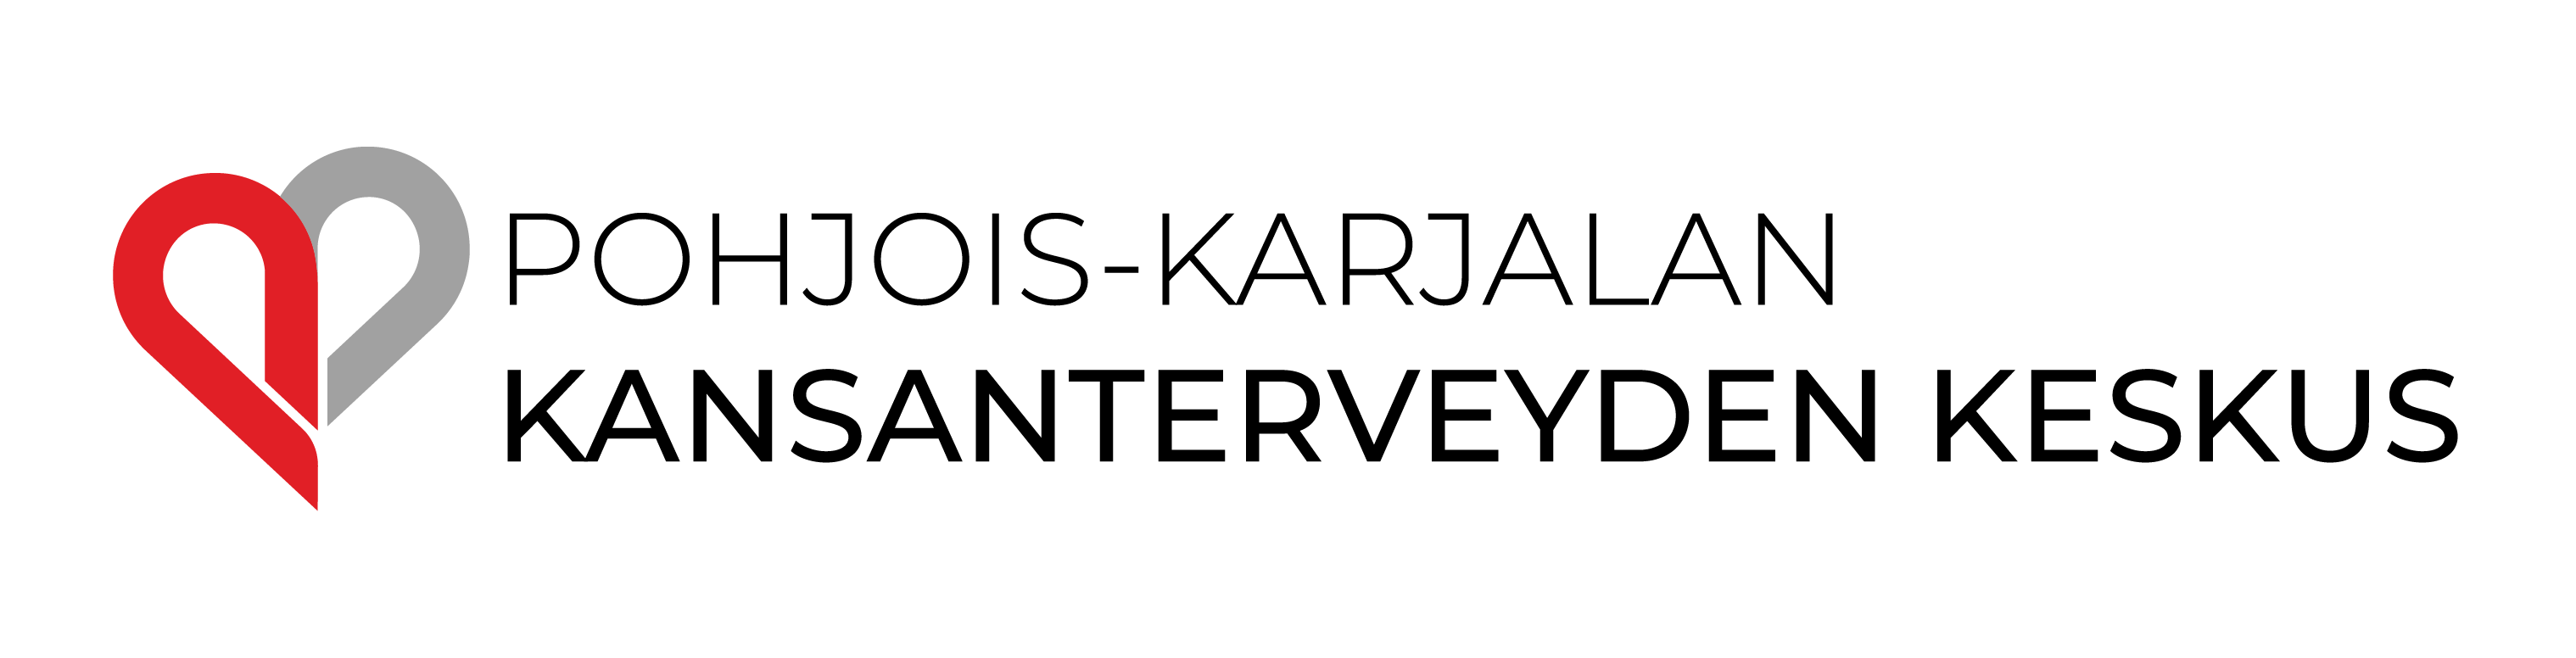 PKKTK logo